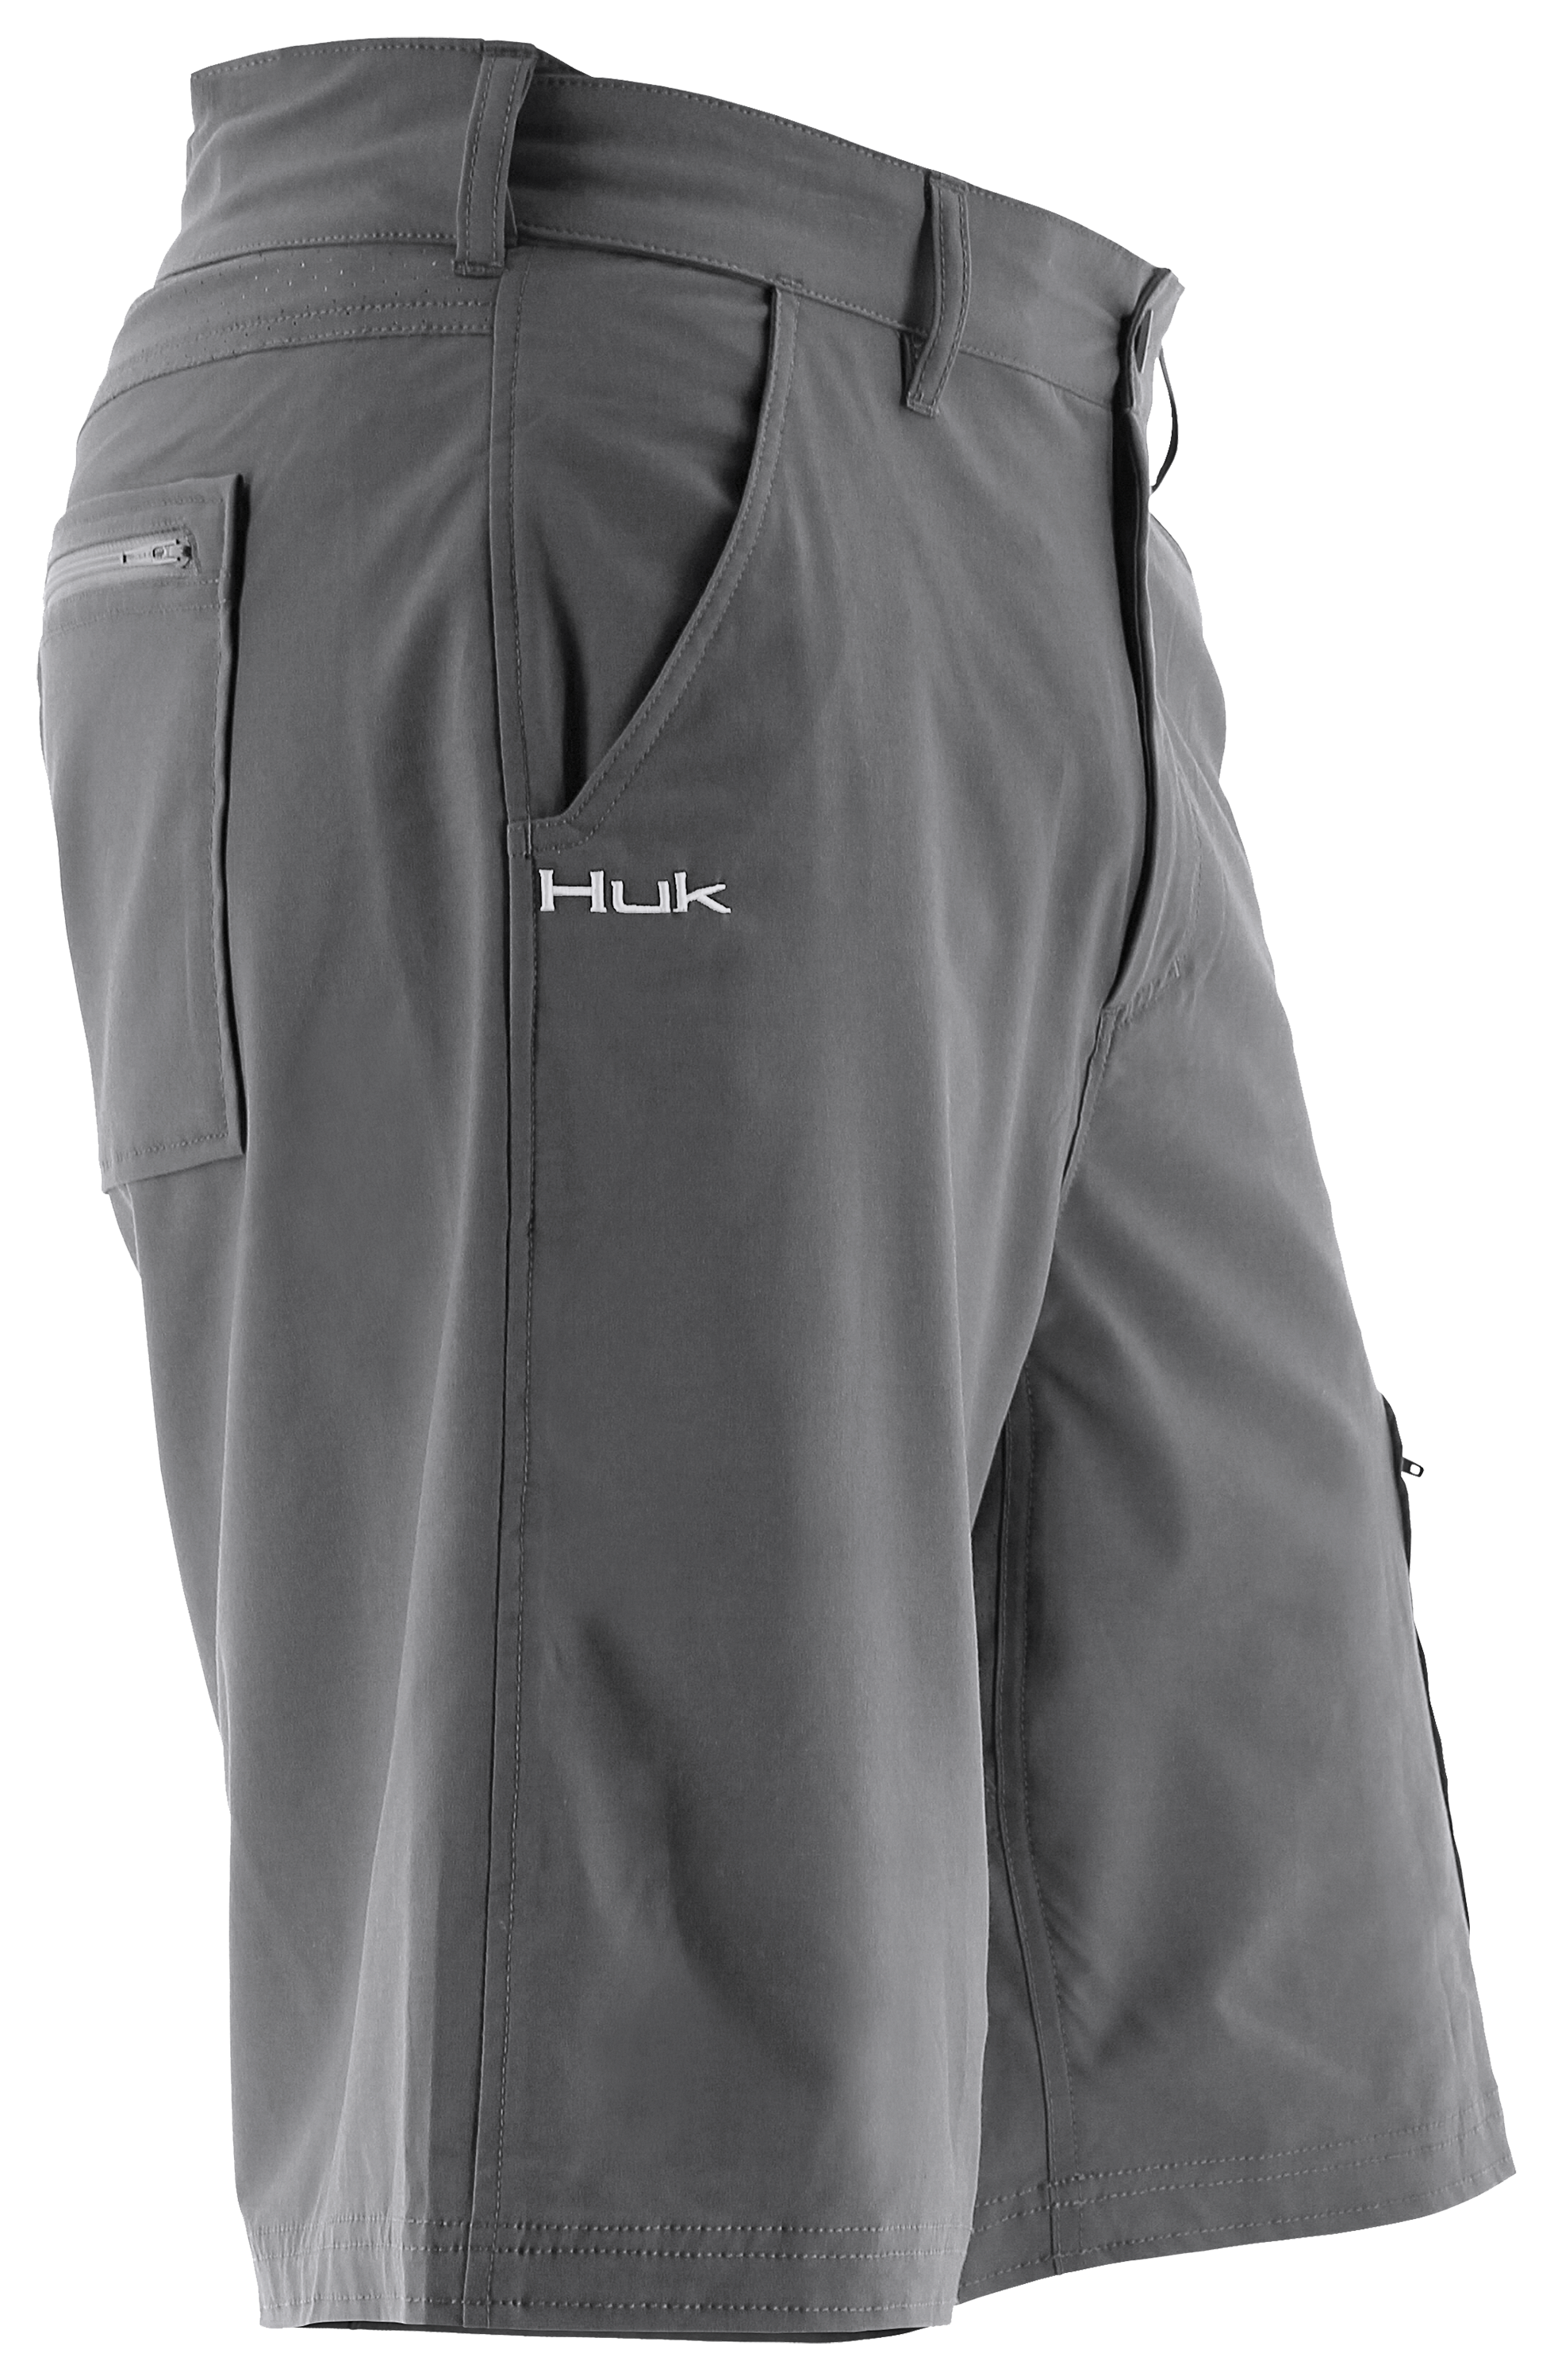 NWT Huk Fishing Shorts Mens XL Black Performance 10.5 Inseam Zip